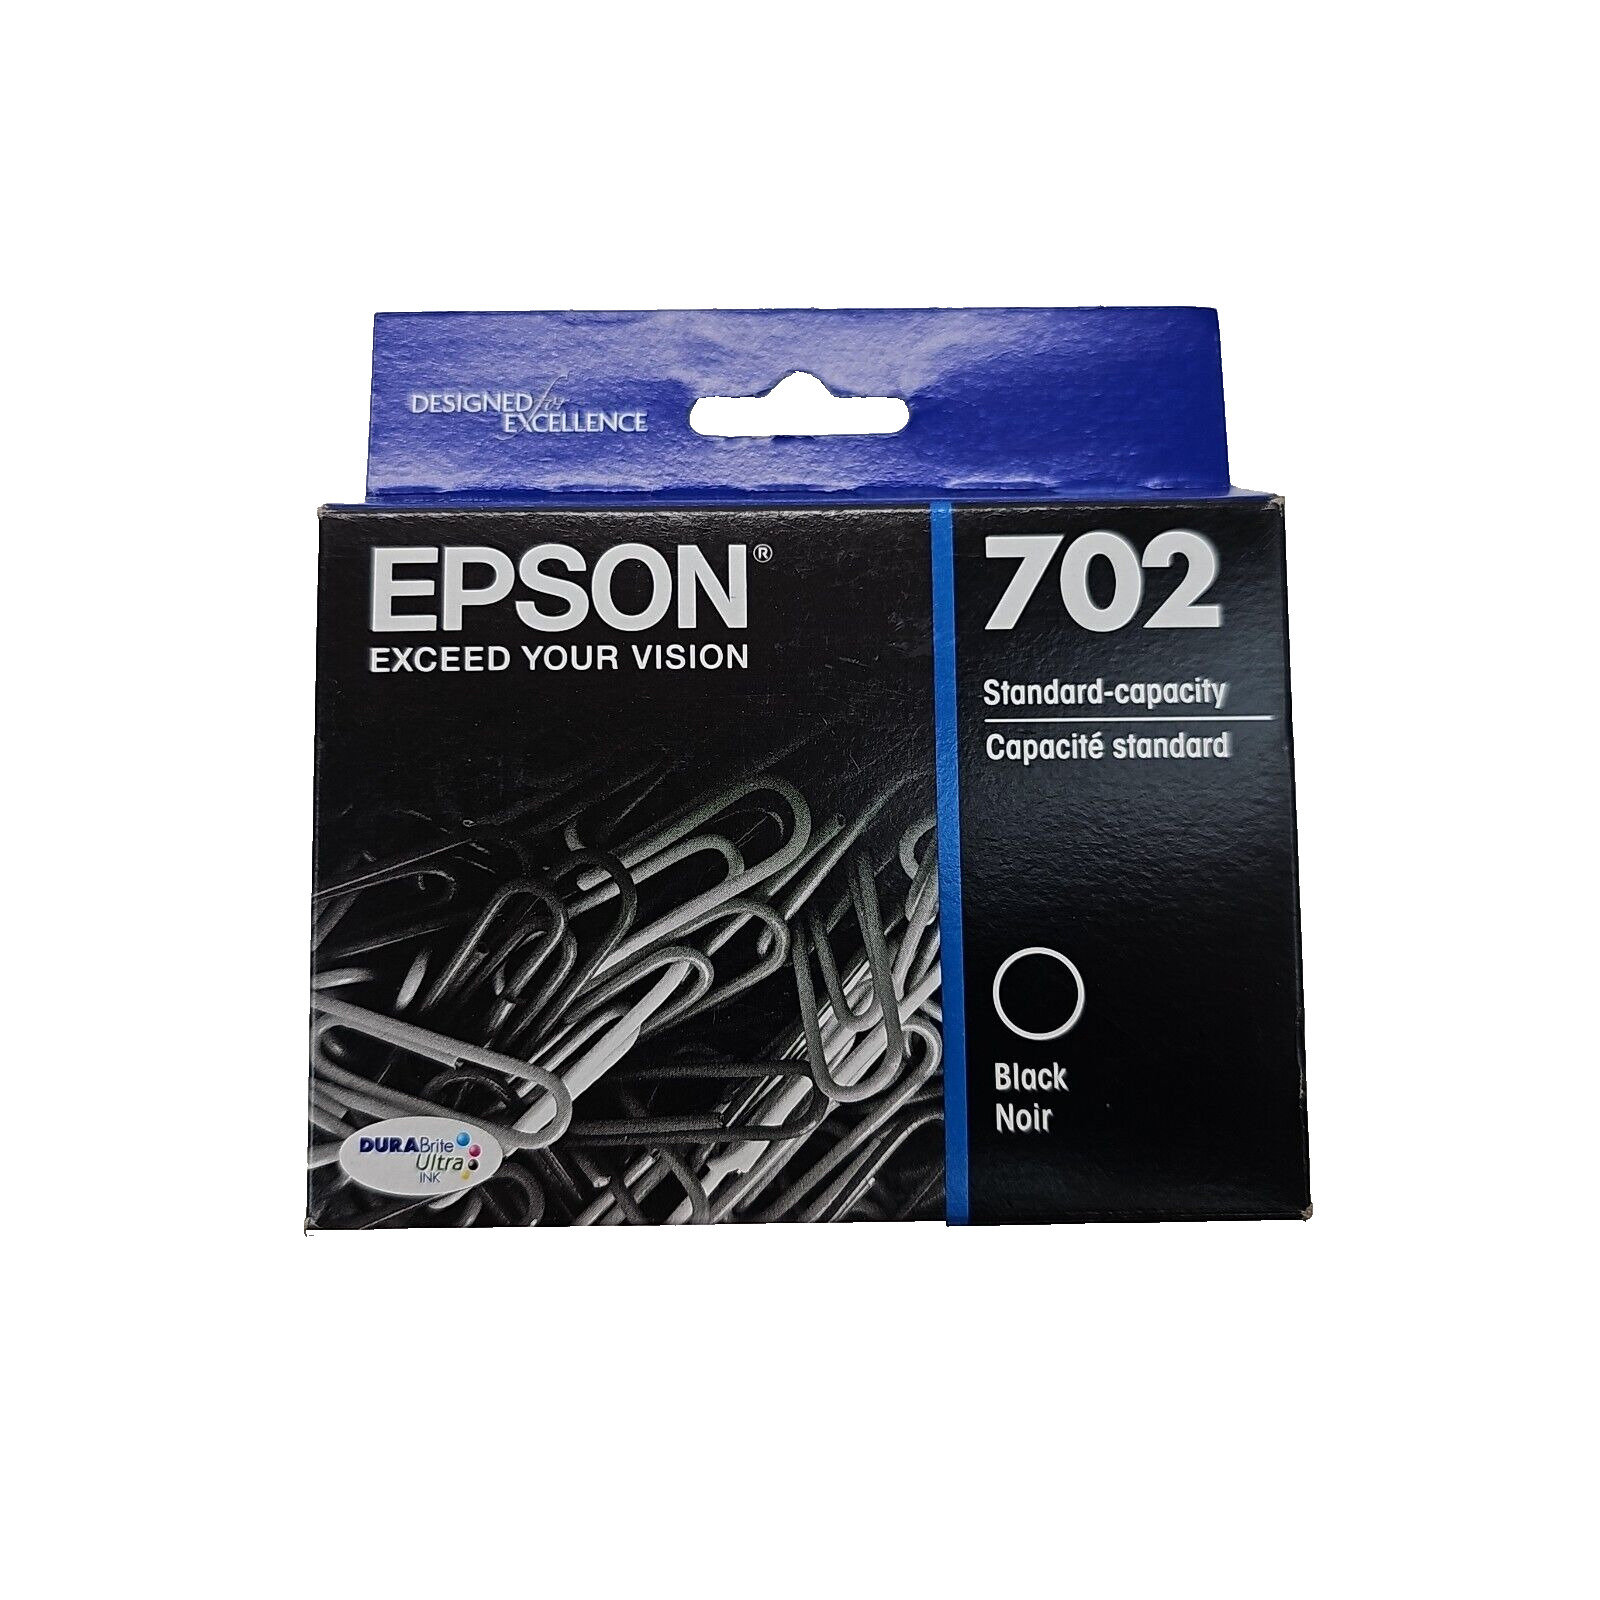 Epson 702 Black Noir  Ink Cartridge - Expires 01/2025 - NEW SEALED